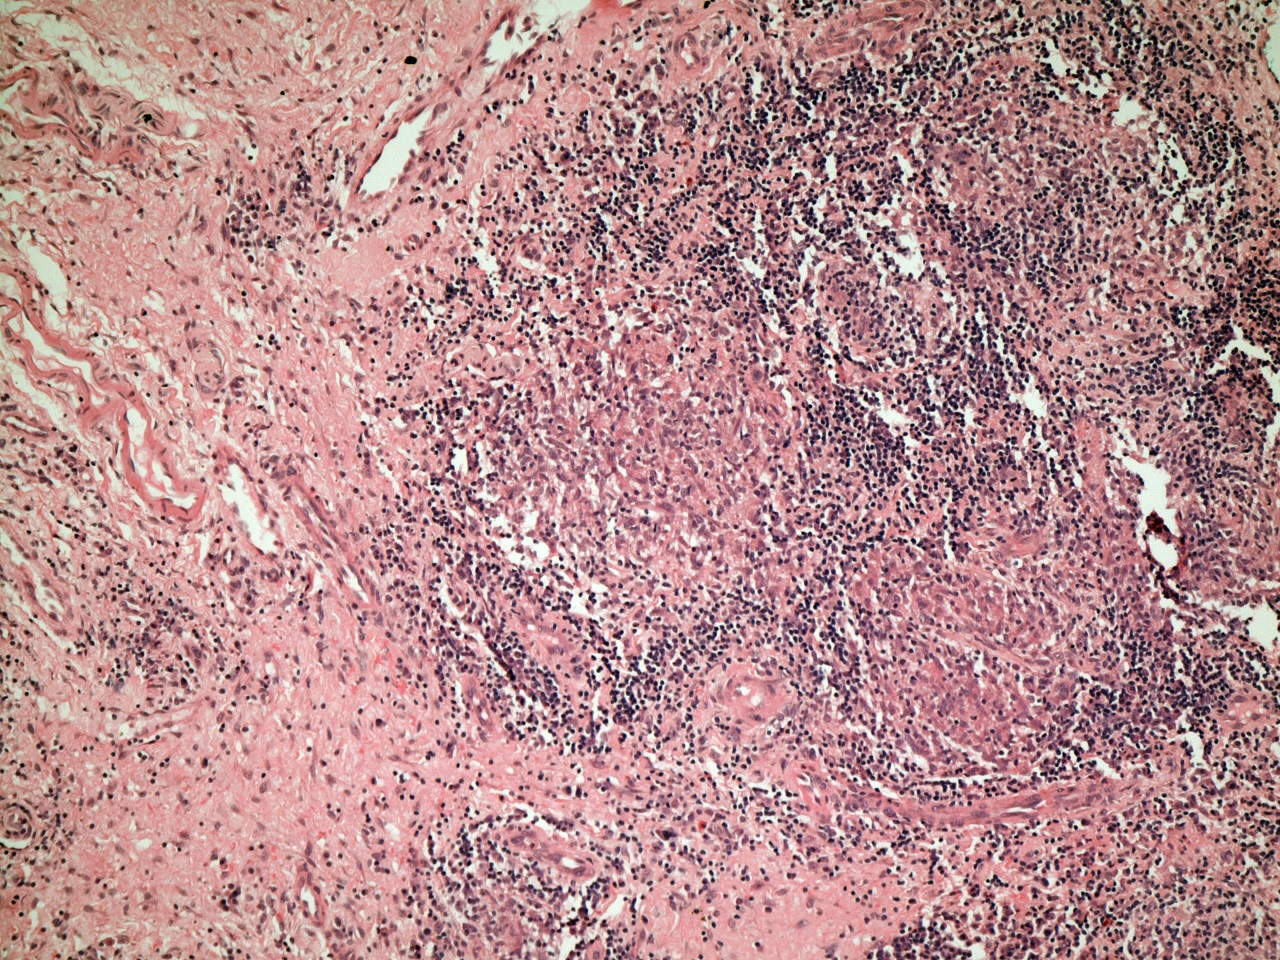 Granuloma with lymphocytes